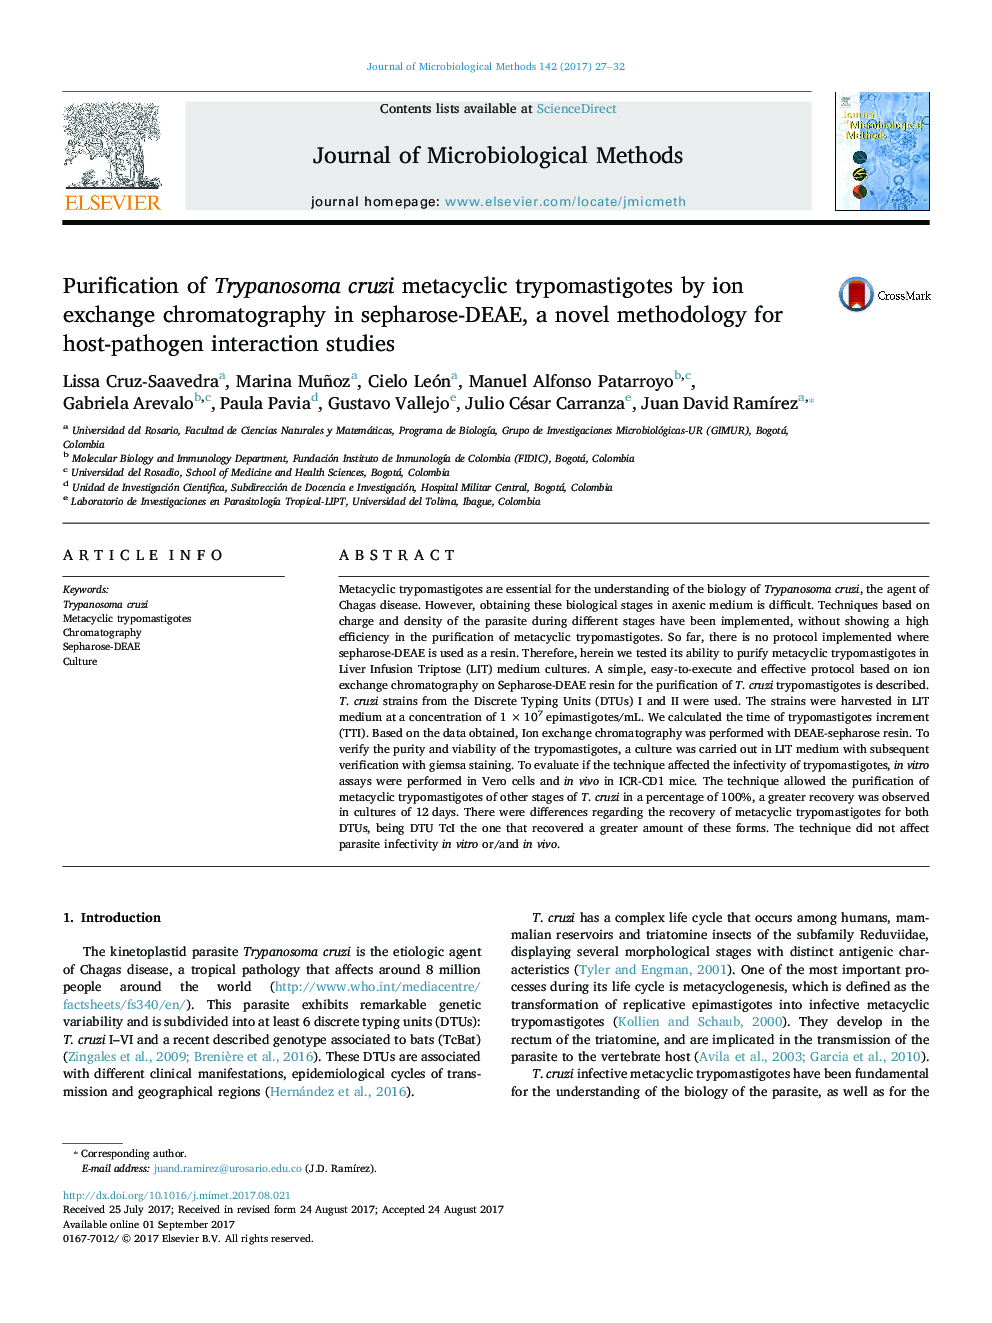 Purification of Trypanosoma cruzi metacyclic trypomastigotes by ion exchange chromatography in sepharose-DEAE, a novel methodology for host-pathogen interaction studies